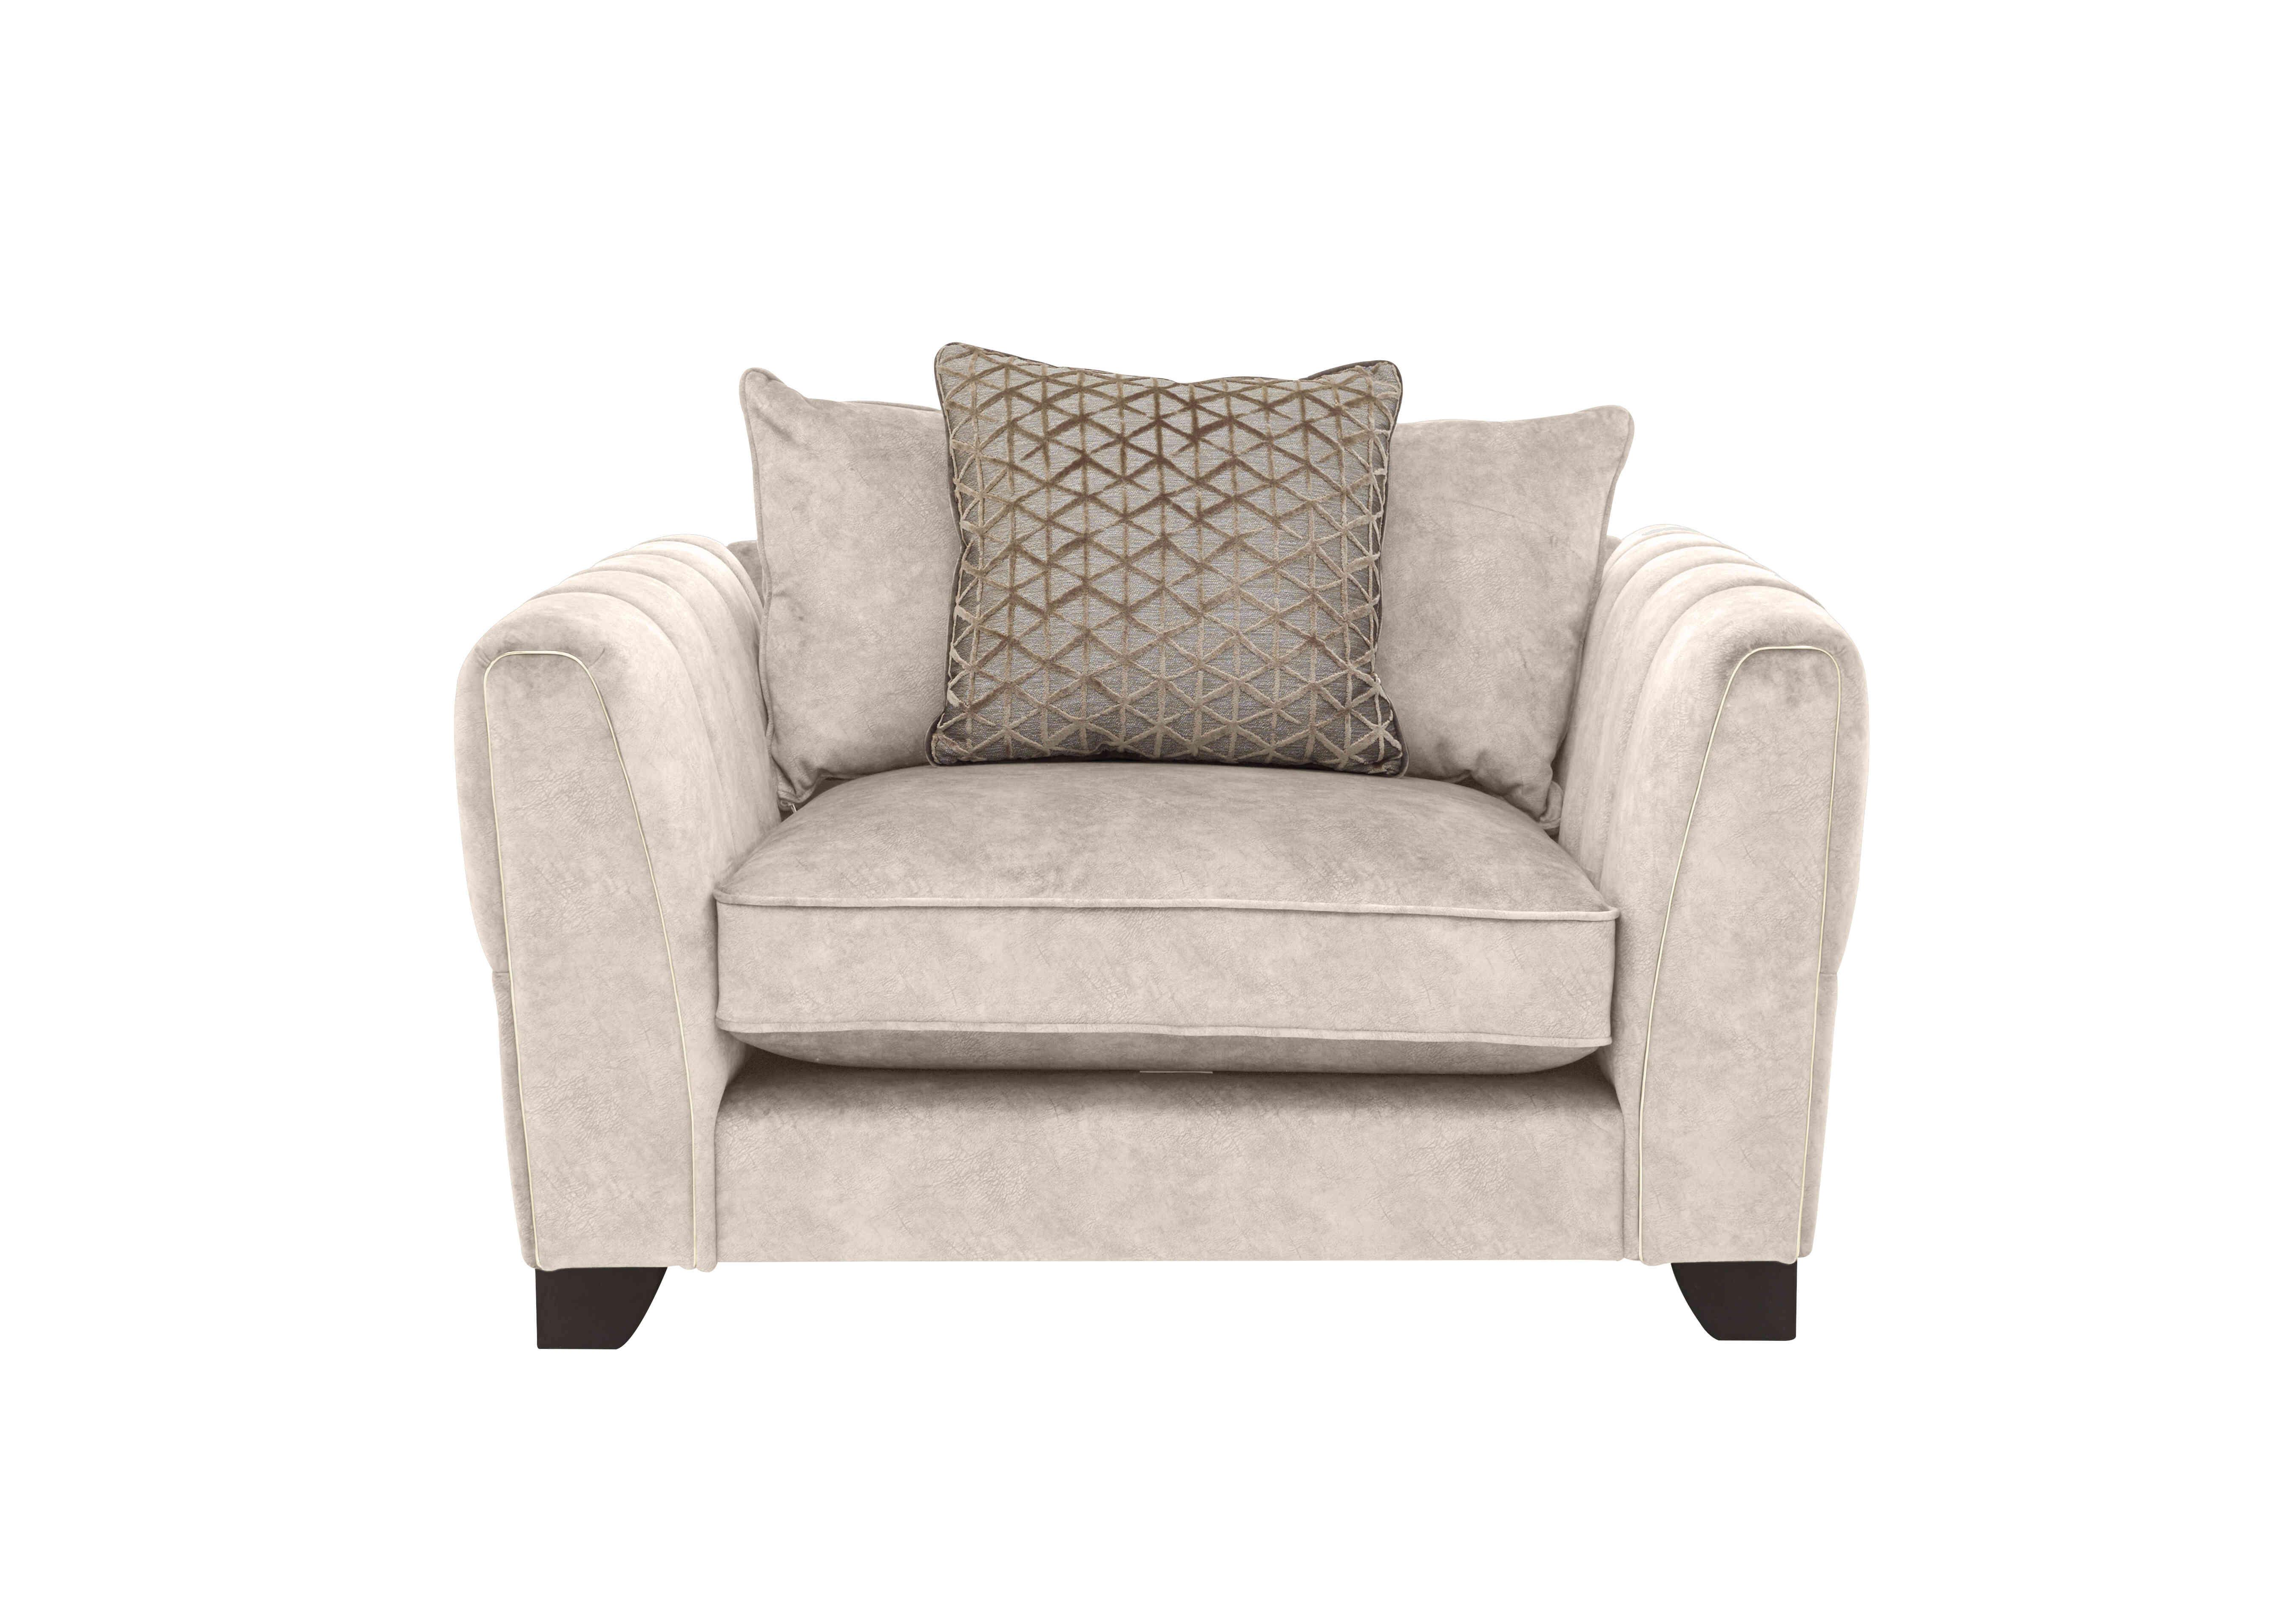 Ariana Pillow Back Fabric Snuggler Chair in Dapple Cream Brass Insert on Furniture Village